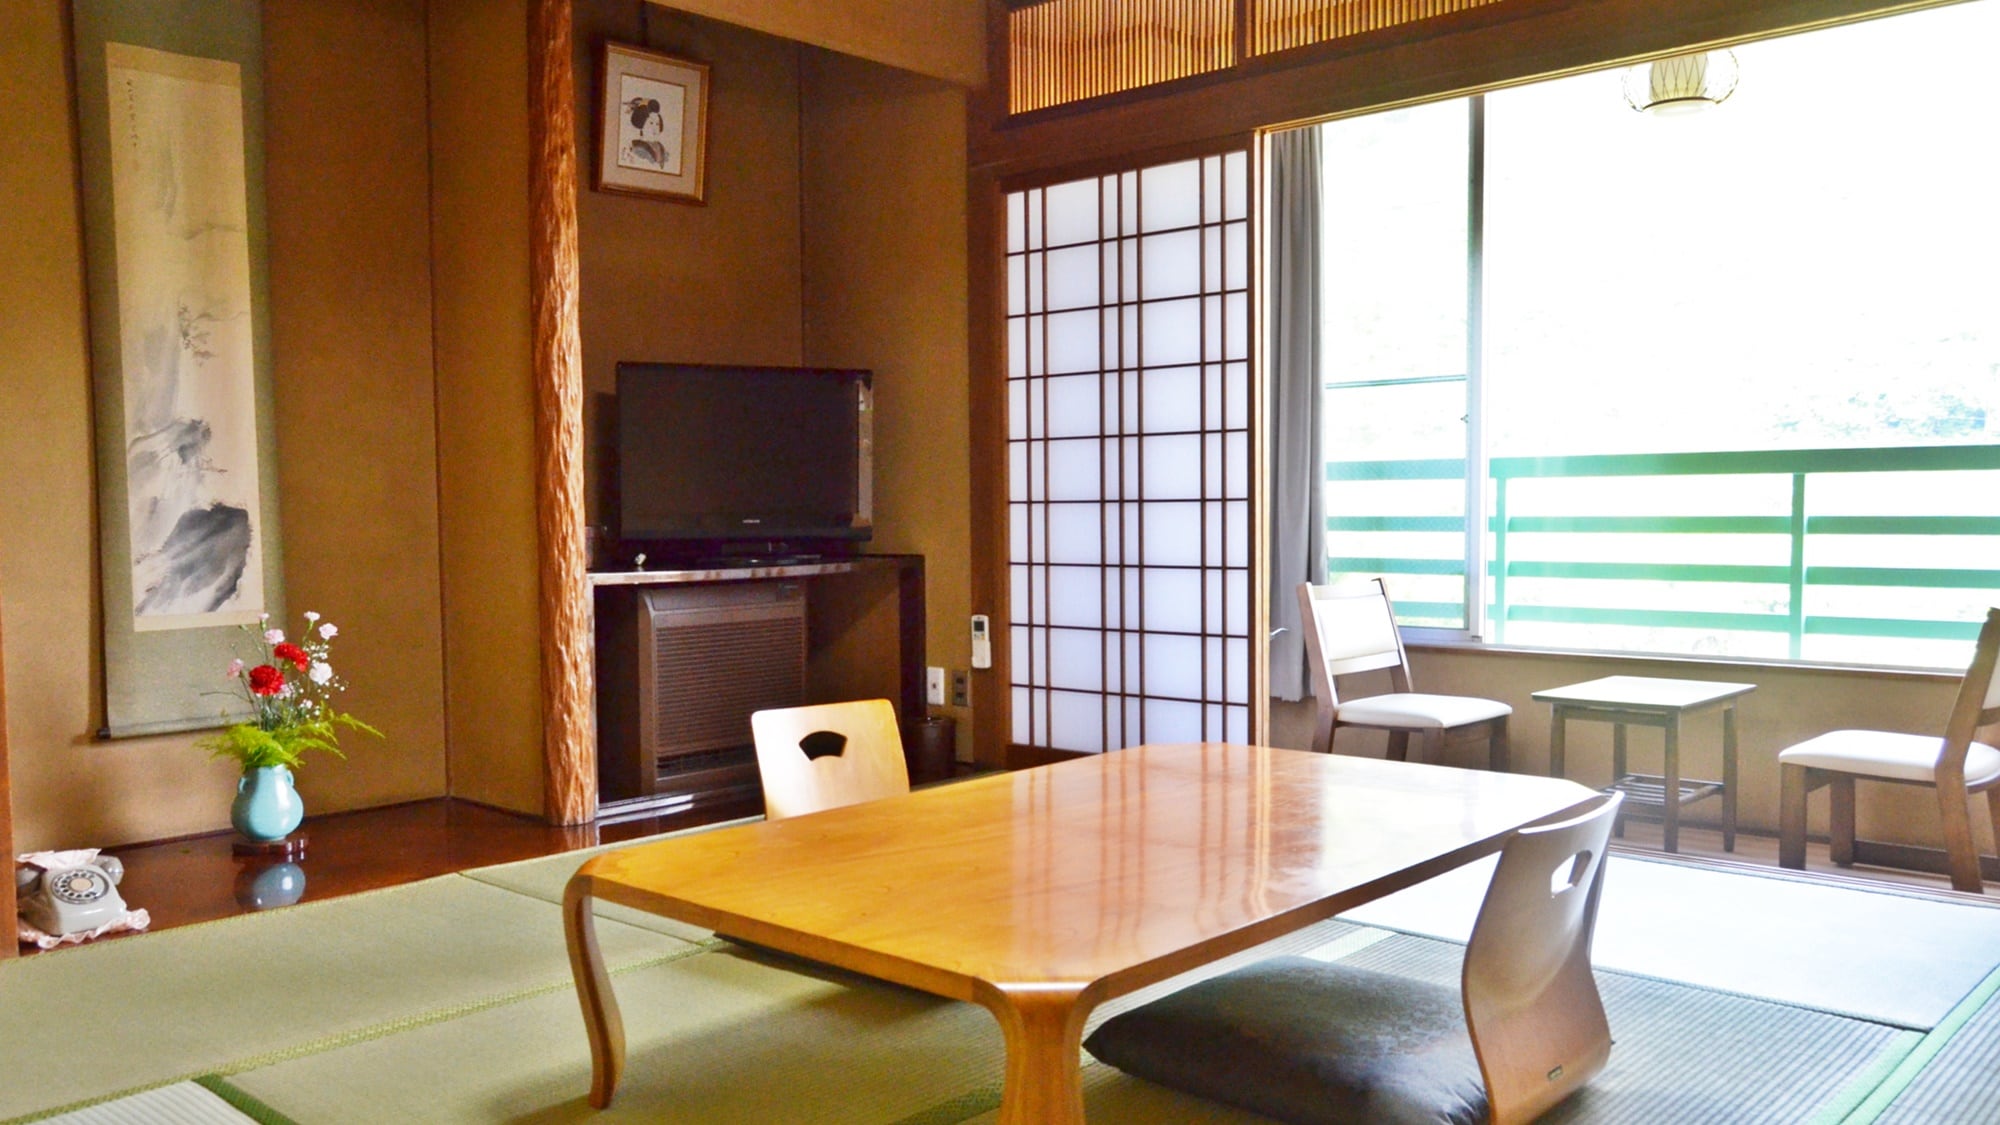 * [Kamar] Ini adalah contoh kamar bergaya Jepang dengan 8 tikar tatami. Nikmati pemandangan luar di ruang tatami yang menenangkan.